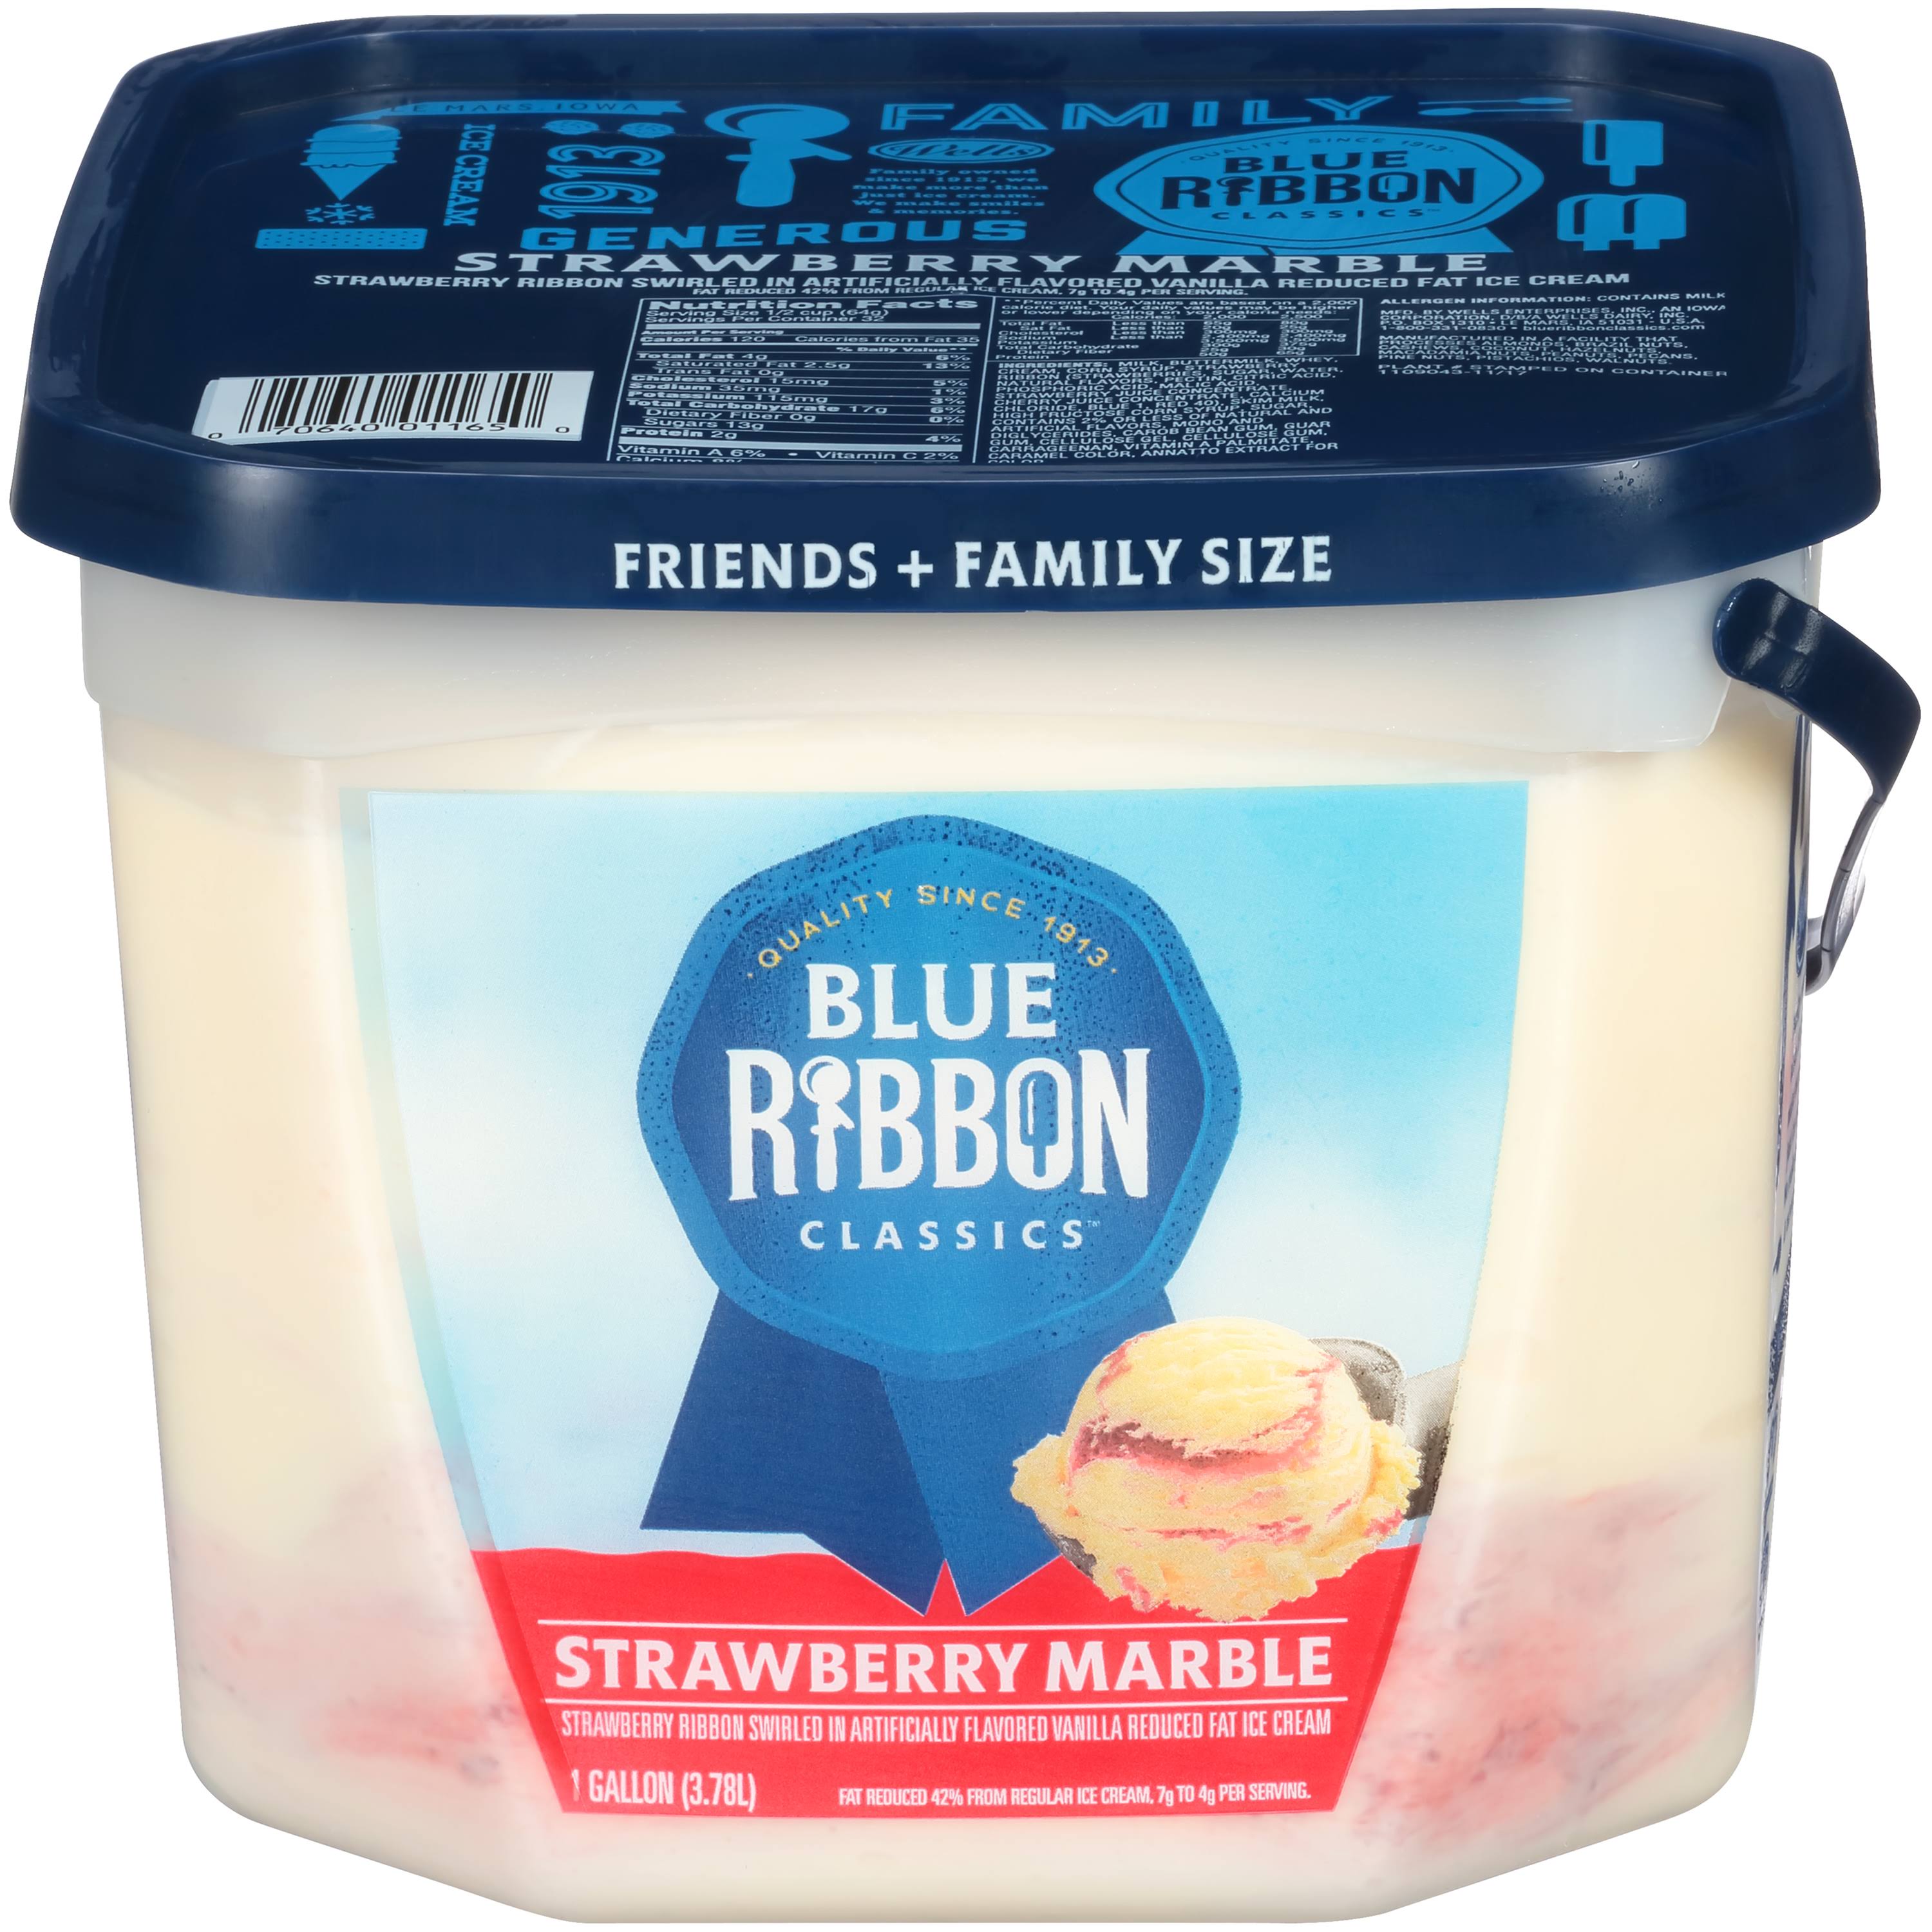 Blue Ribbon Classics Ice Cream, Reduced Fat, Strawberry Marble, Friends + Family Size - 1 gallon (3.78 l)